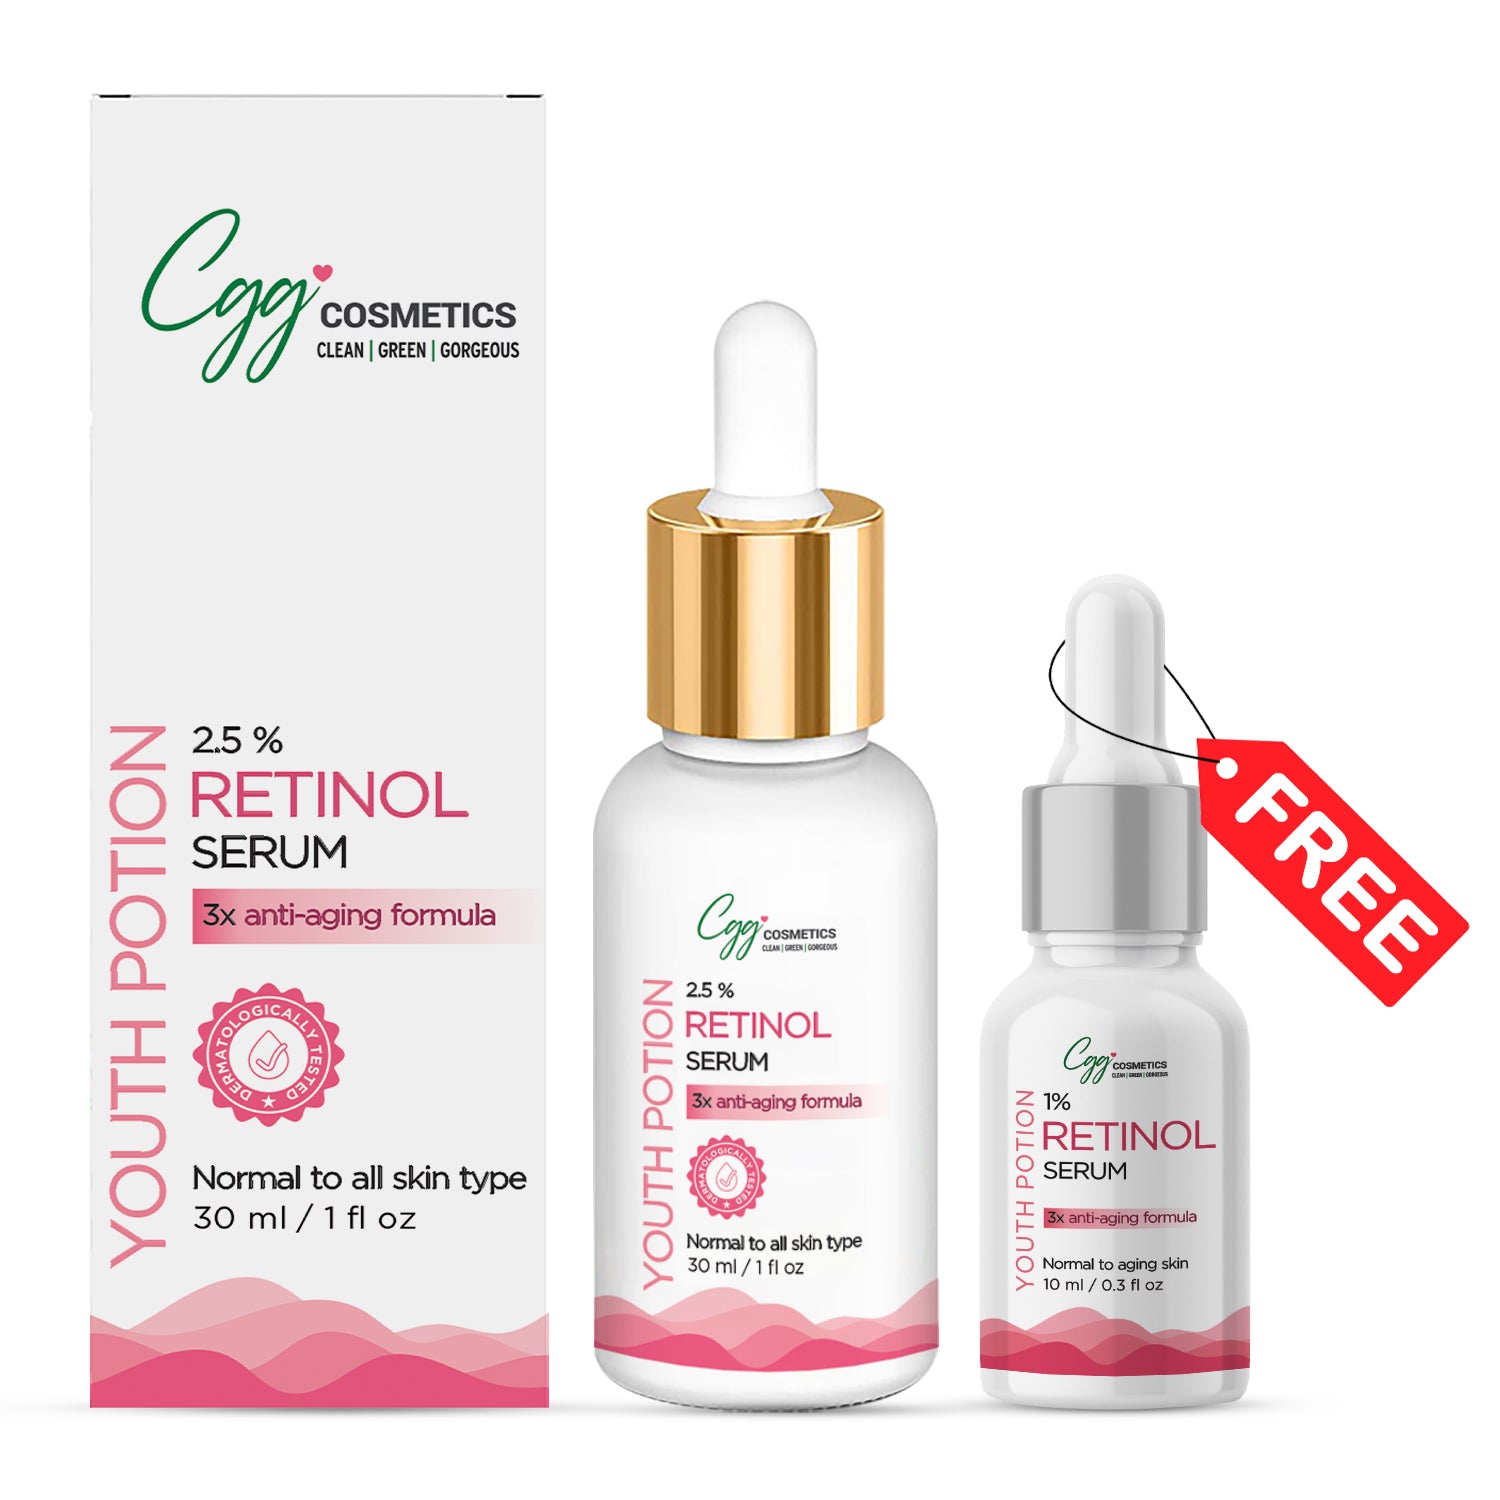 CGG Cosmetics Retinol 2.5% Facial Serum 30ml & Free 10ml Sample of 1% Retinol Serum